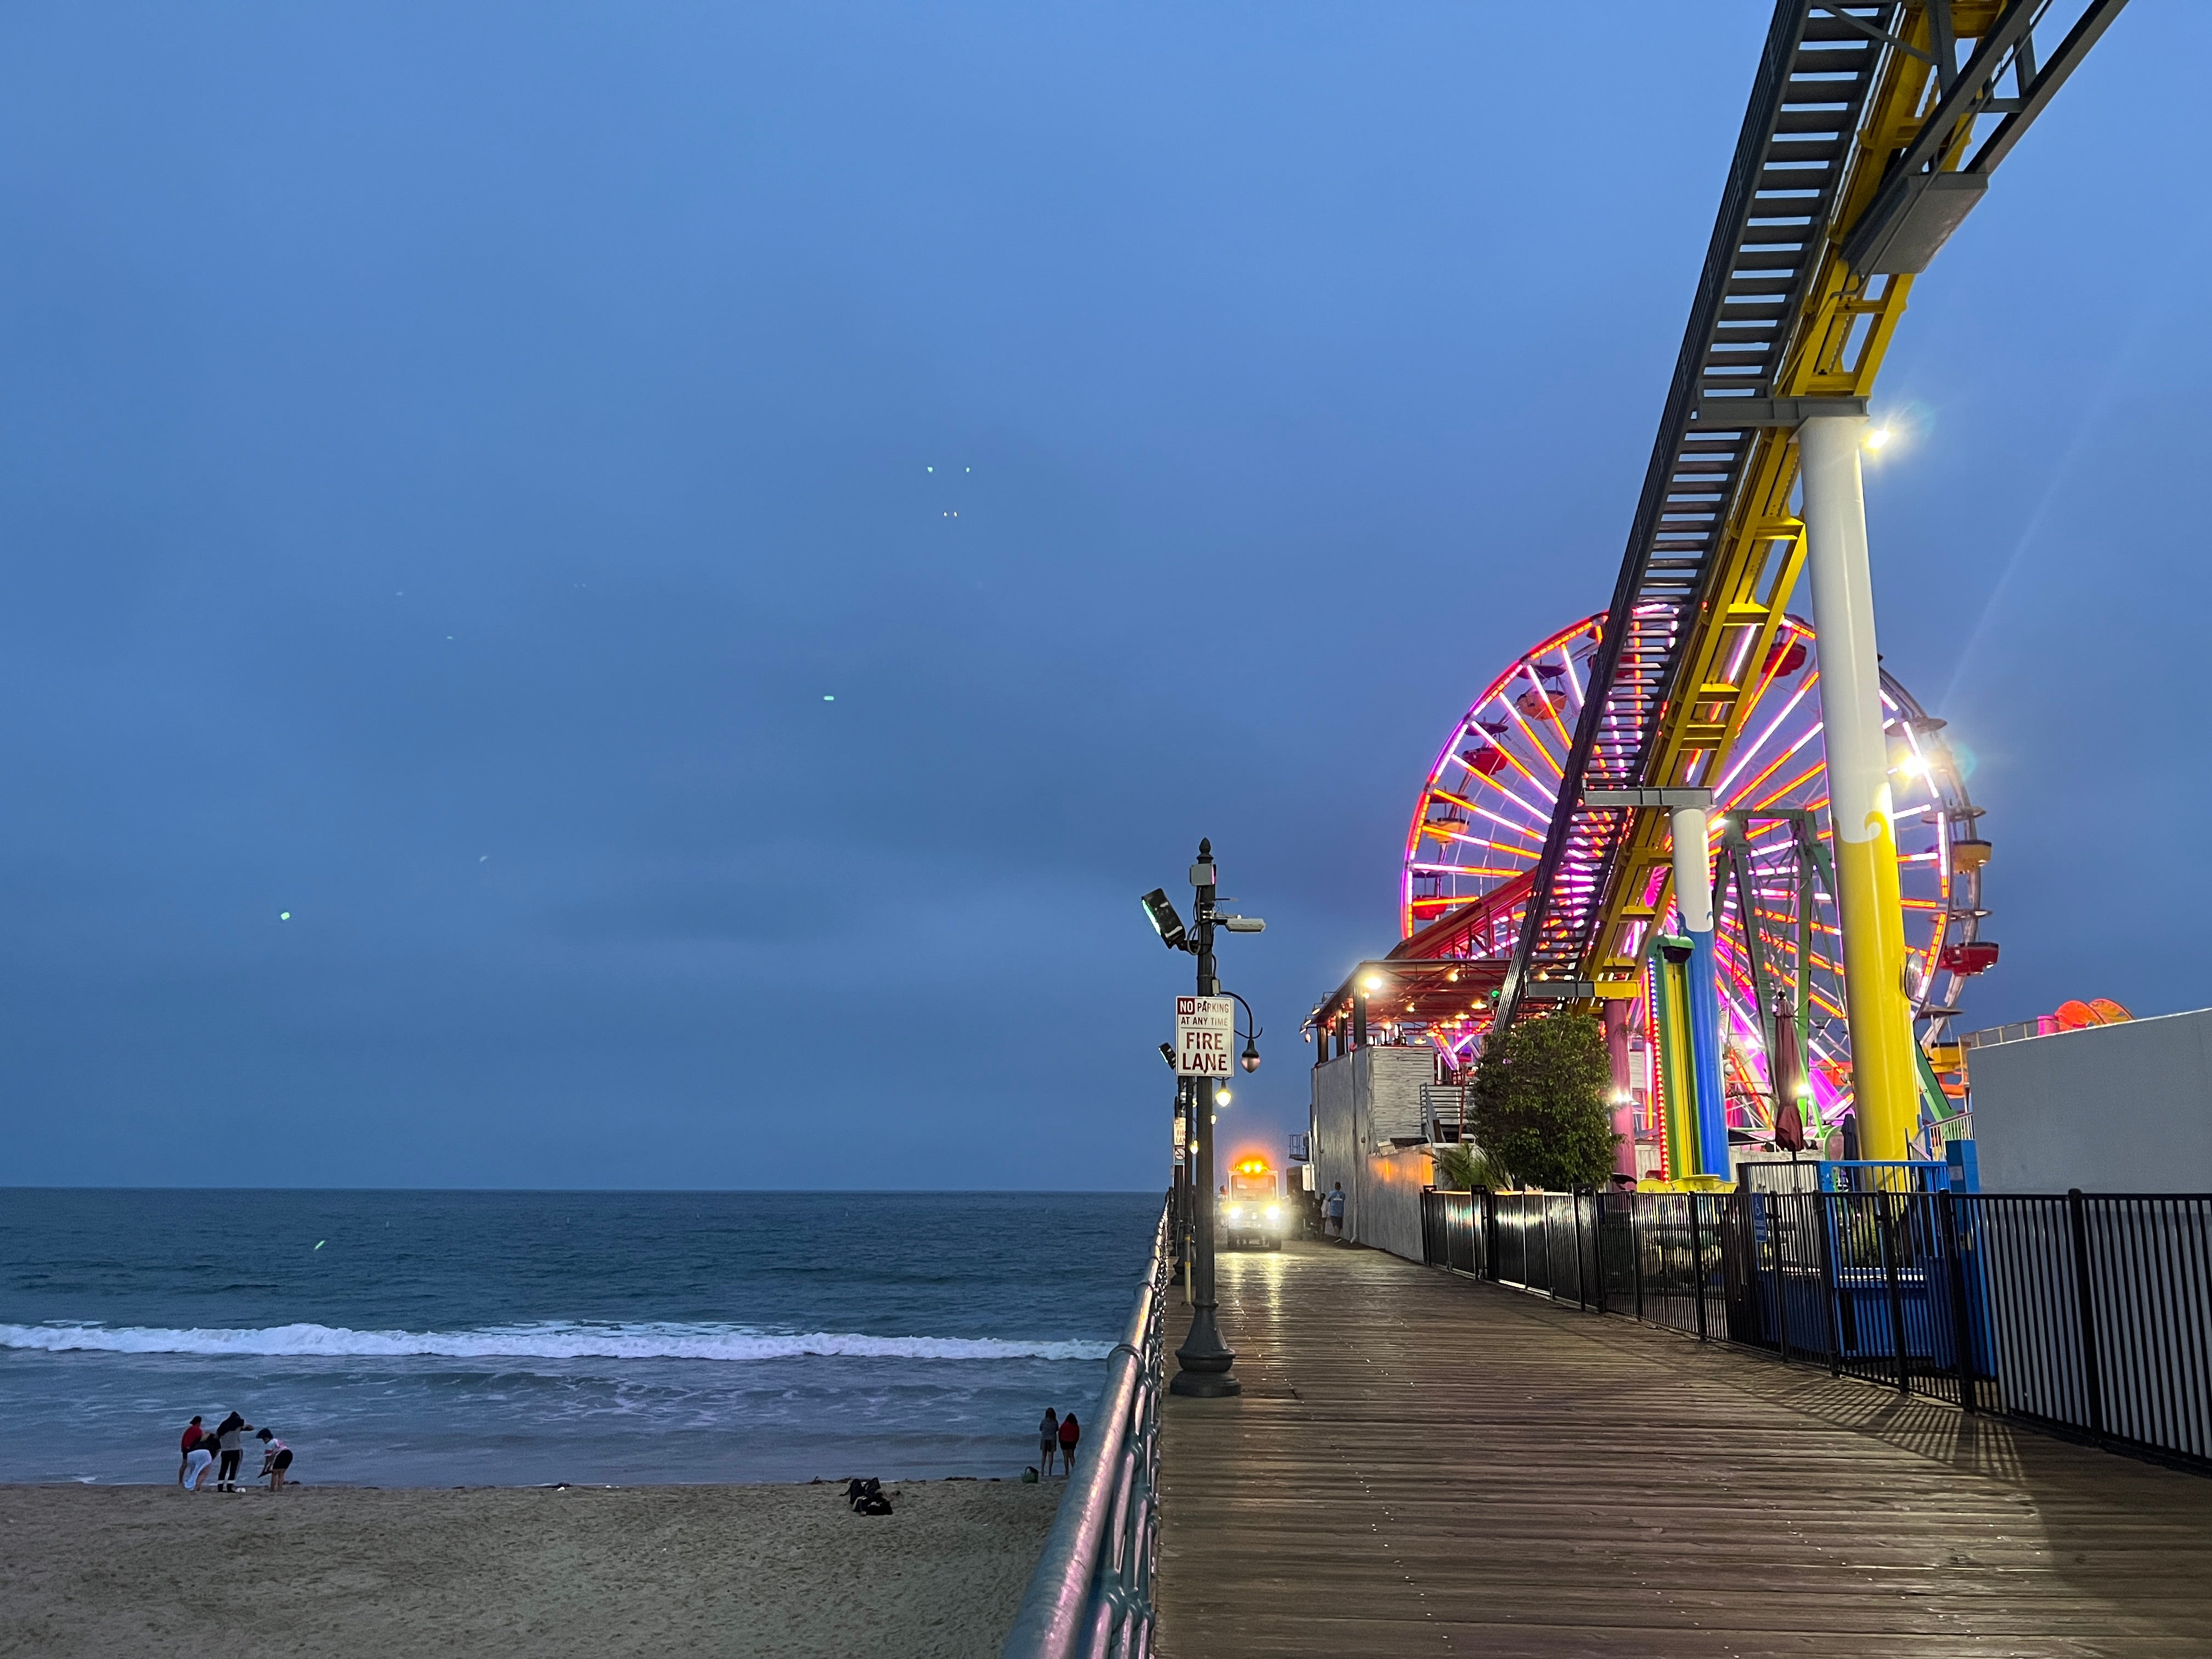 Santa Monica Pier and its amusements